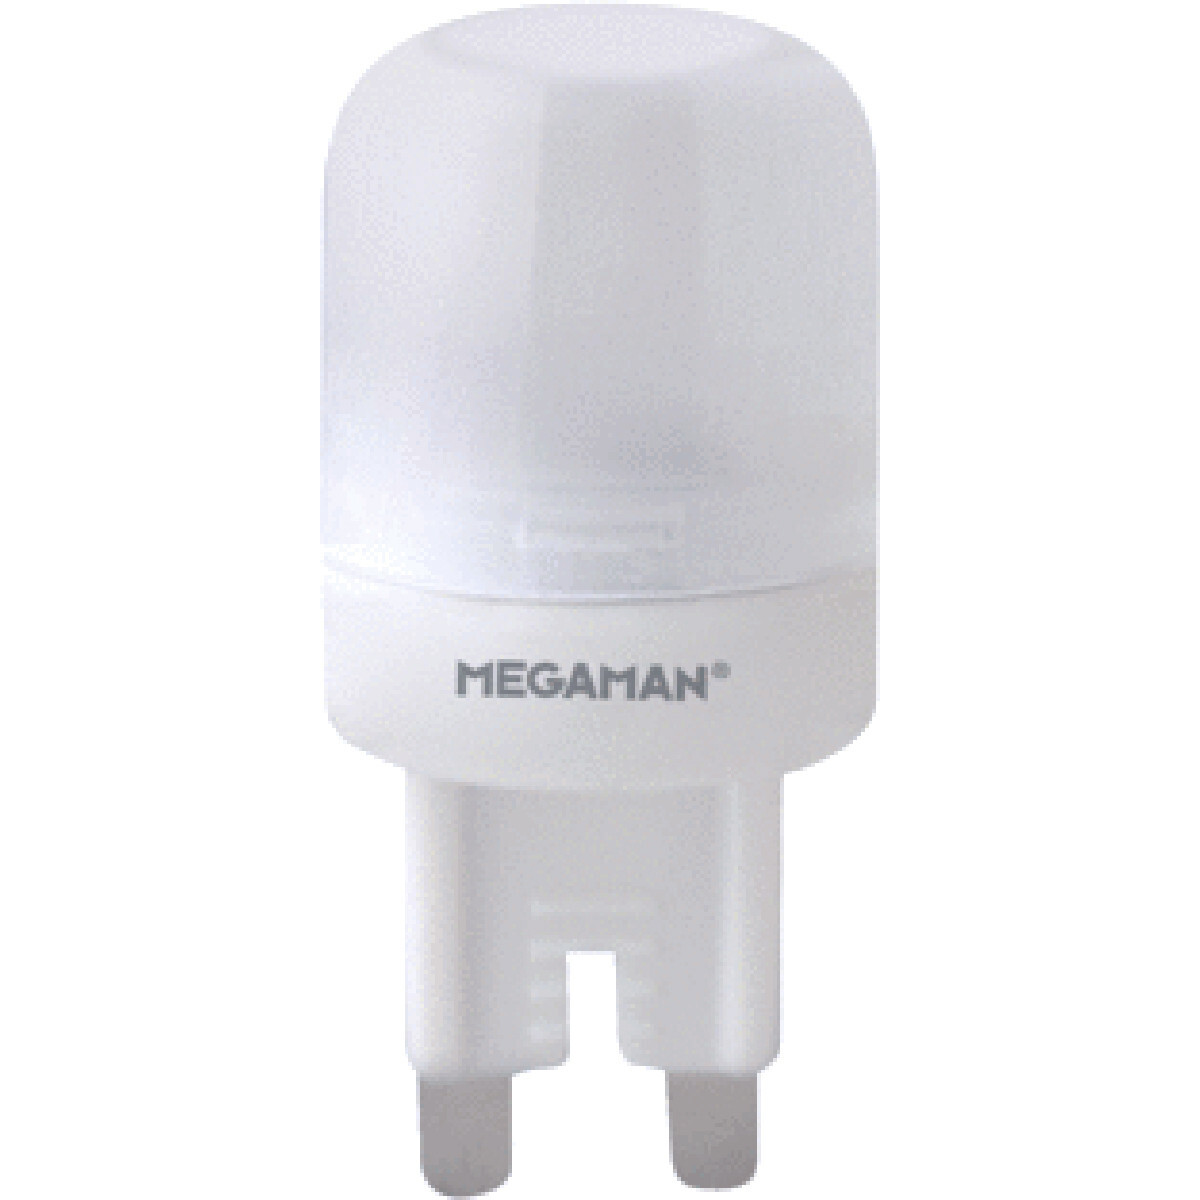 Megaman LED insteek 230V 3W (vervangt 20W) G9